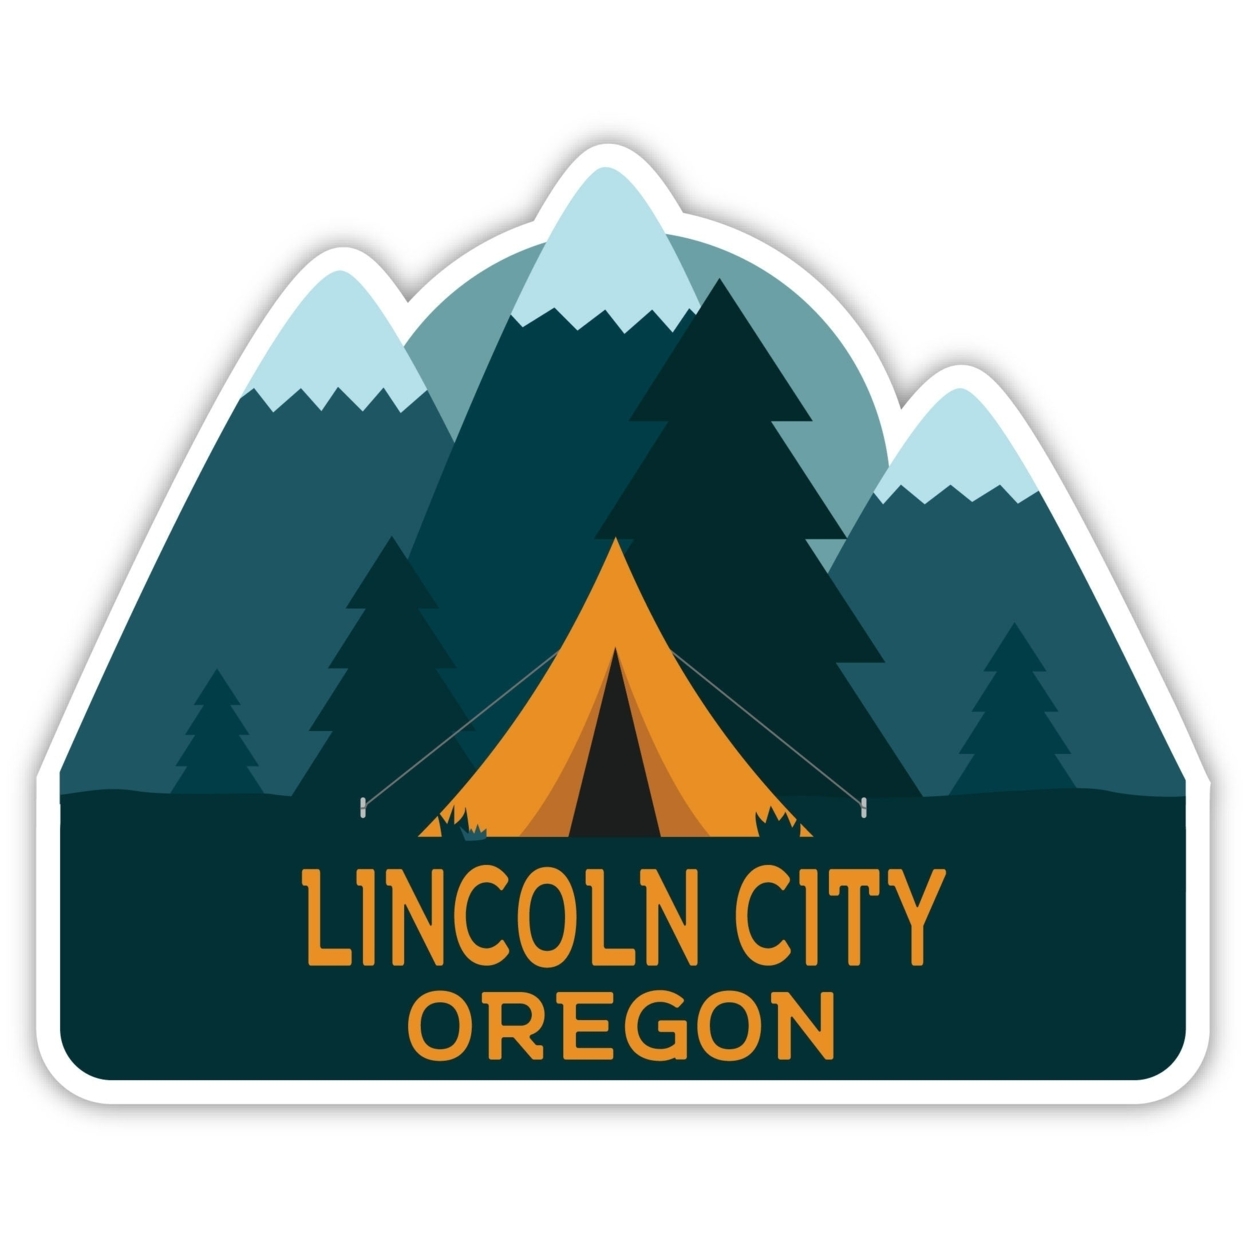 Lincoln City Oregon Souvenir Decorative Stickers (Choose Theme And Size) - 4-Inch, Camp Life